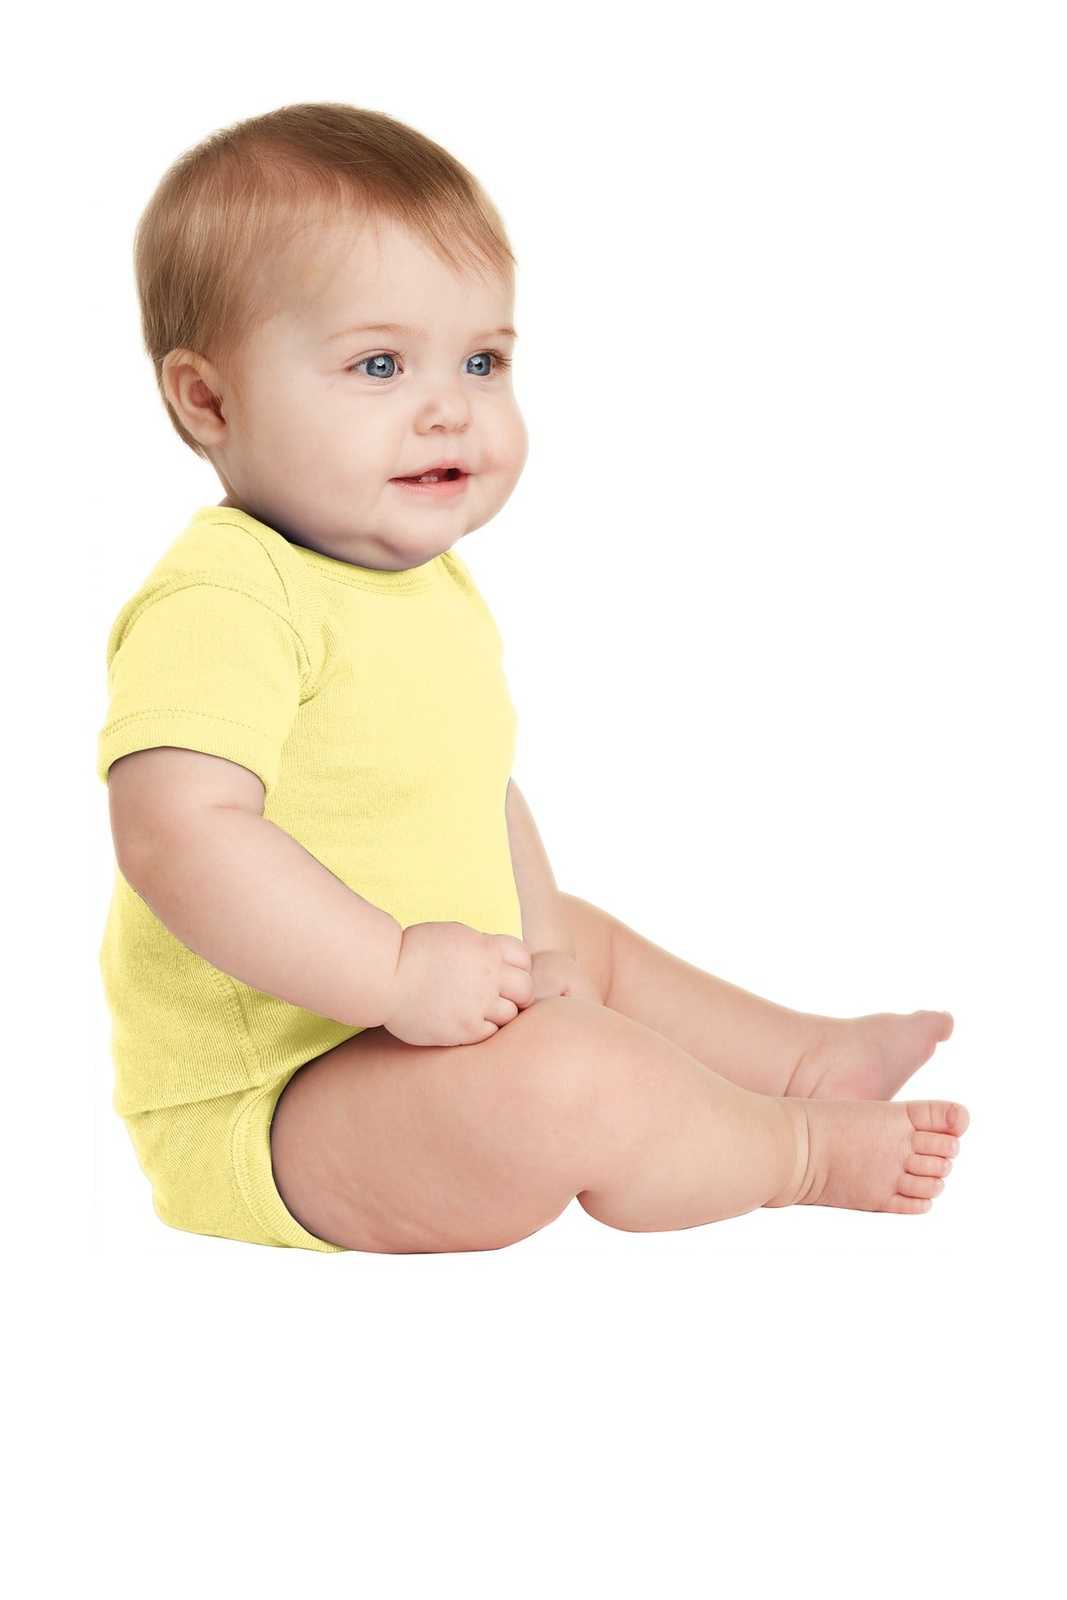 Rabbit Skins 4400 Infant Short Sleeve Baby Rib Bodysuit - Banana - HIT a Double